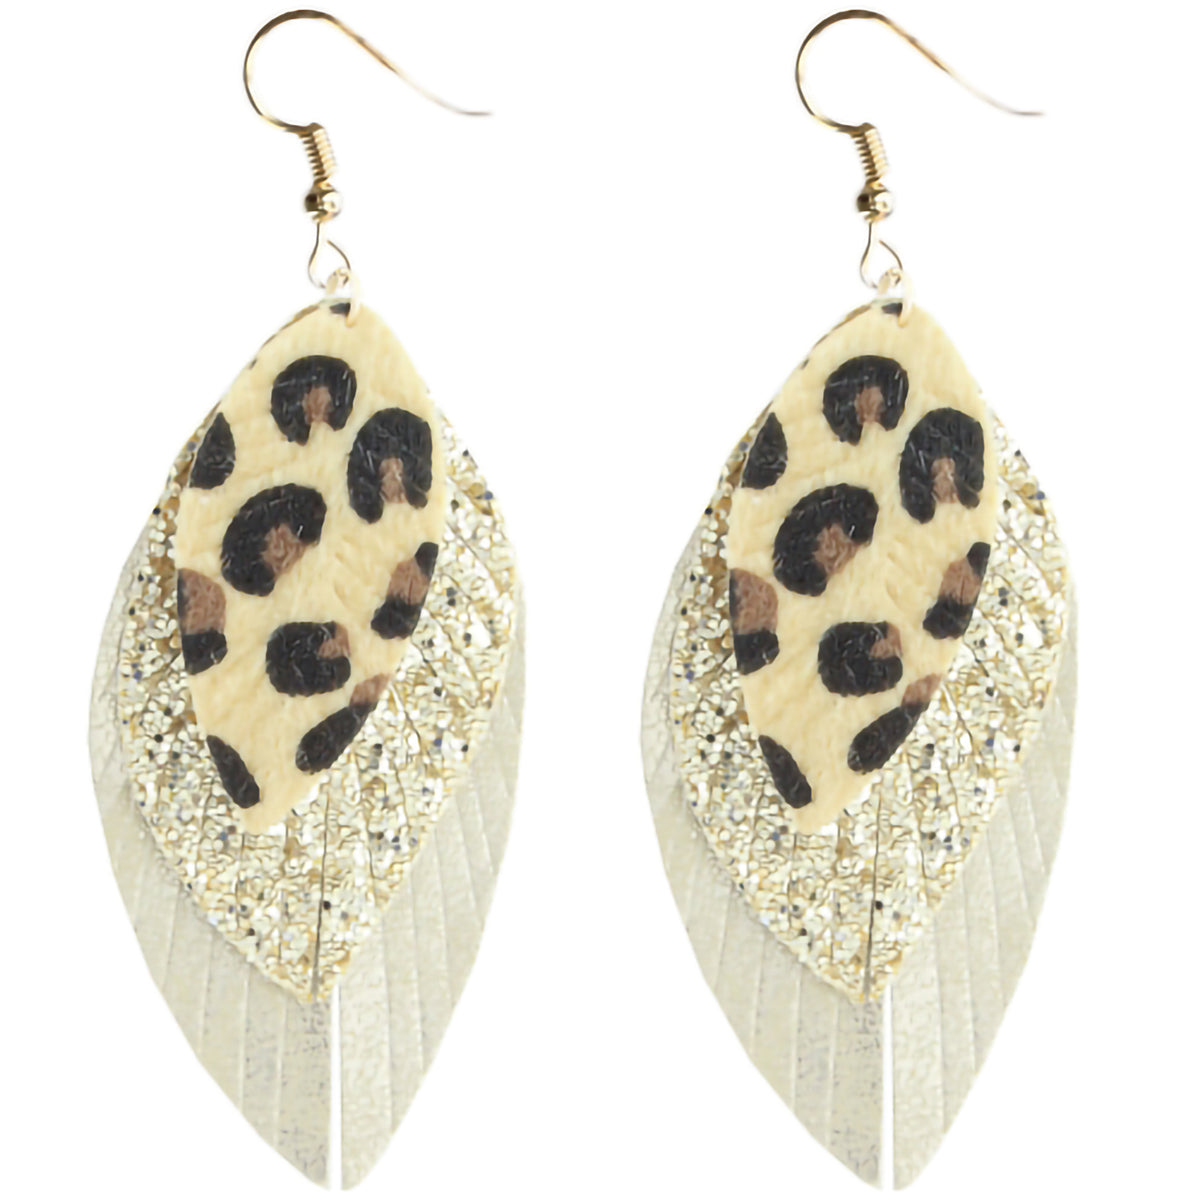 73648 - Glitter 3 Layered Earrings - Gold - Fashion Jewelry Wholesale